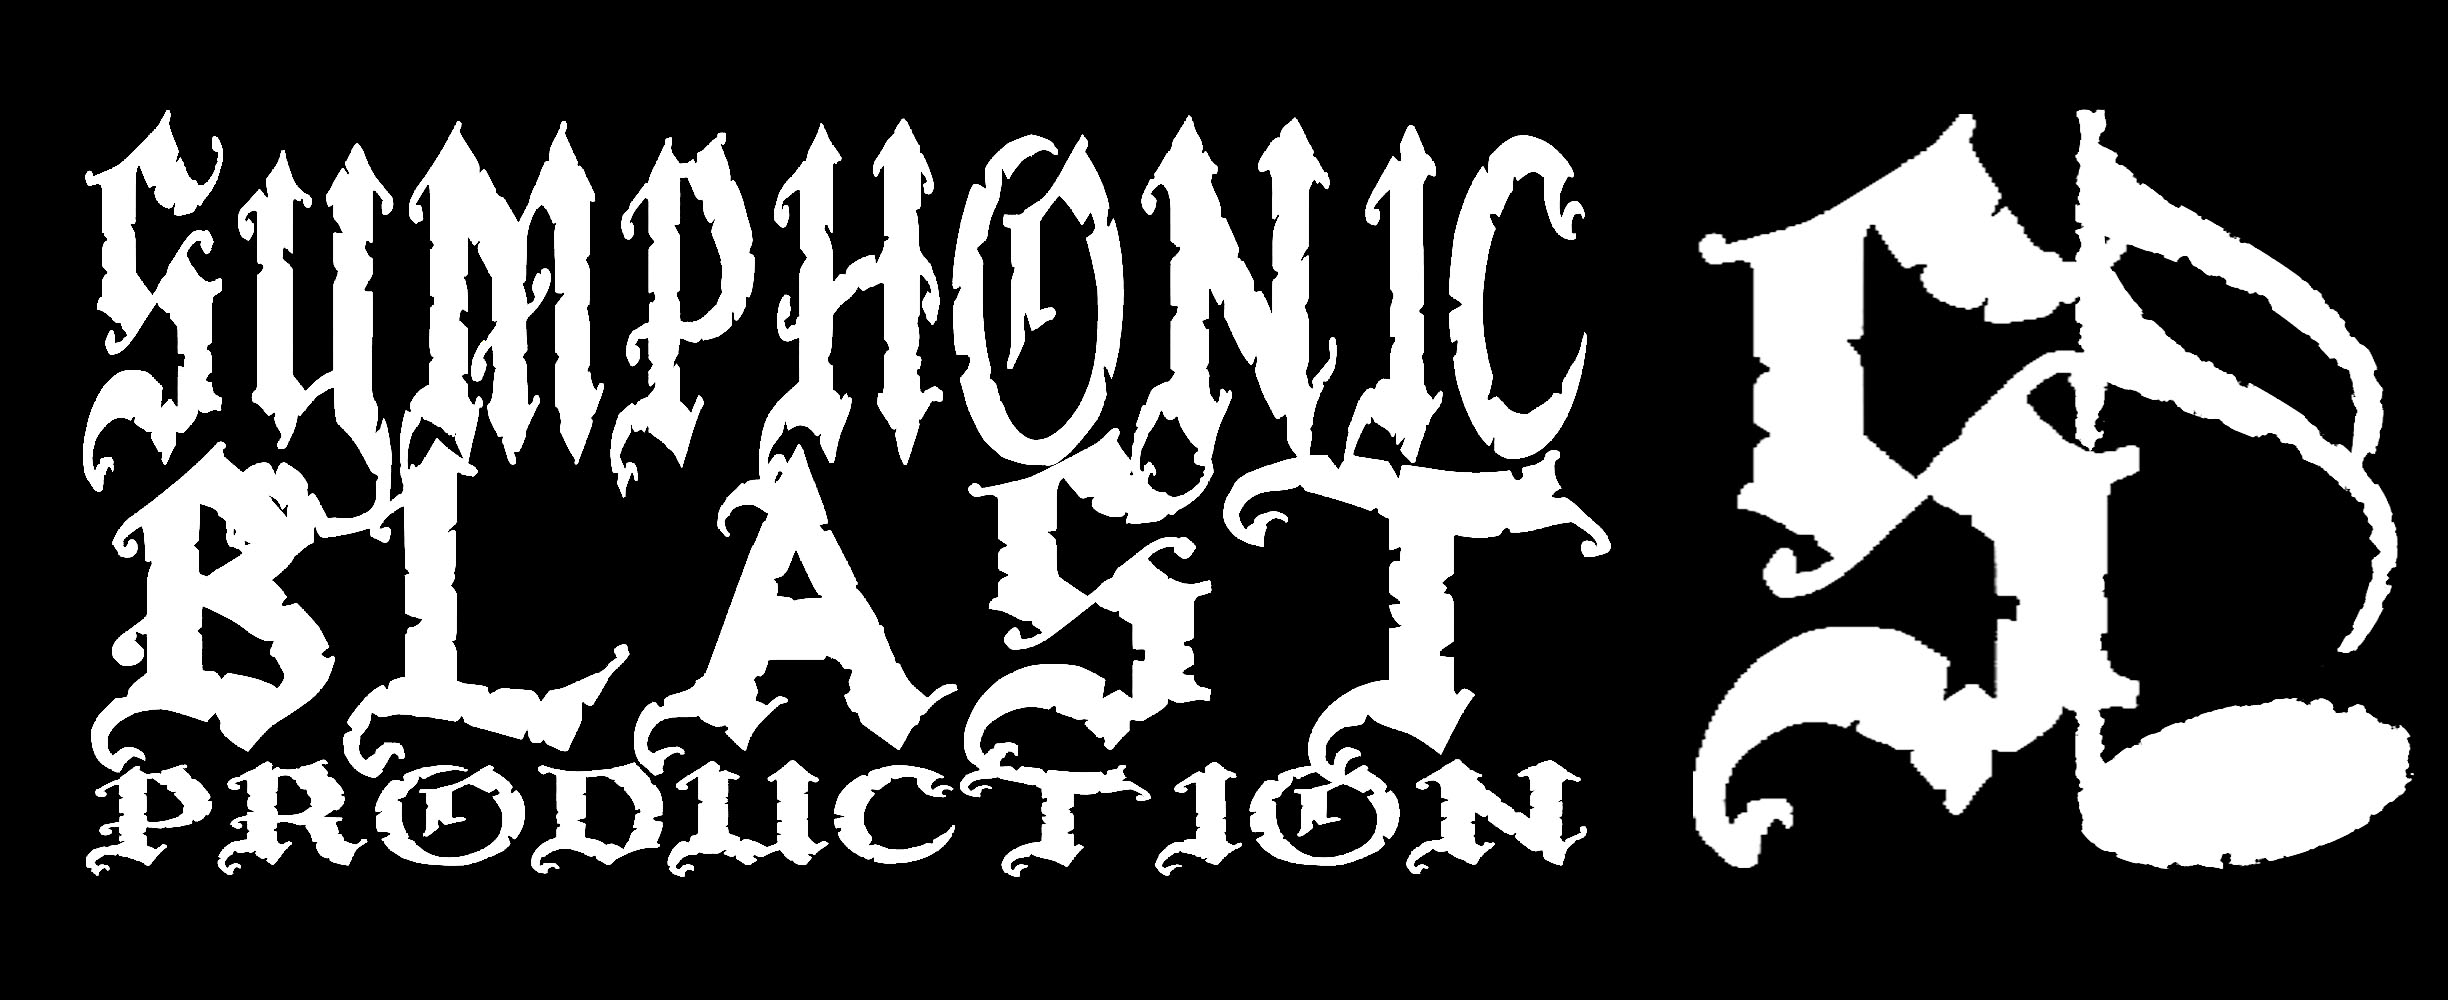 Symphonic Blast Production - [03/19/06]